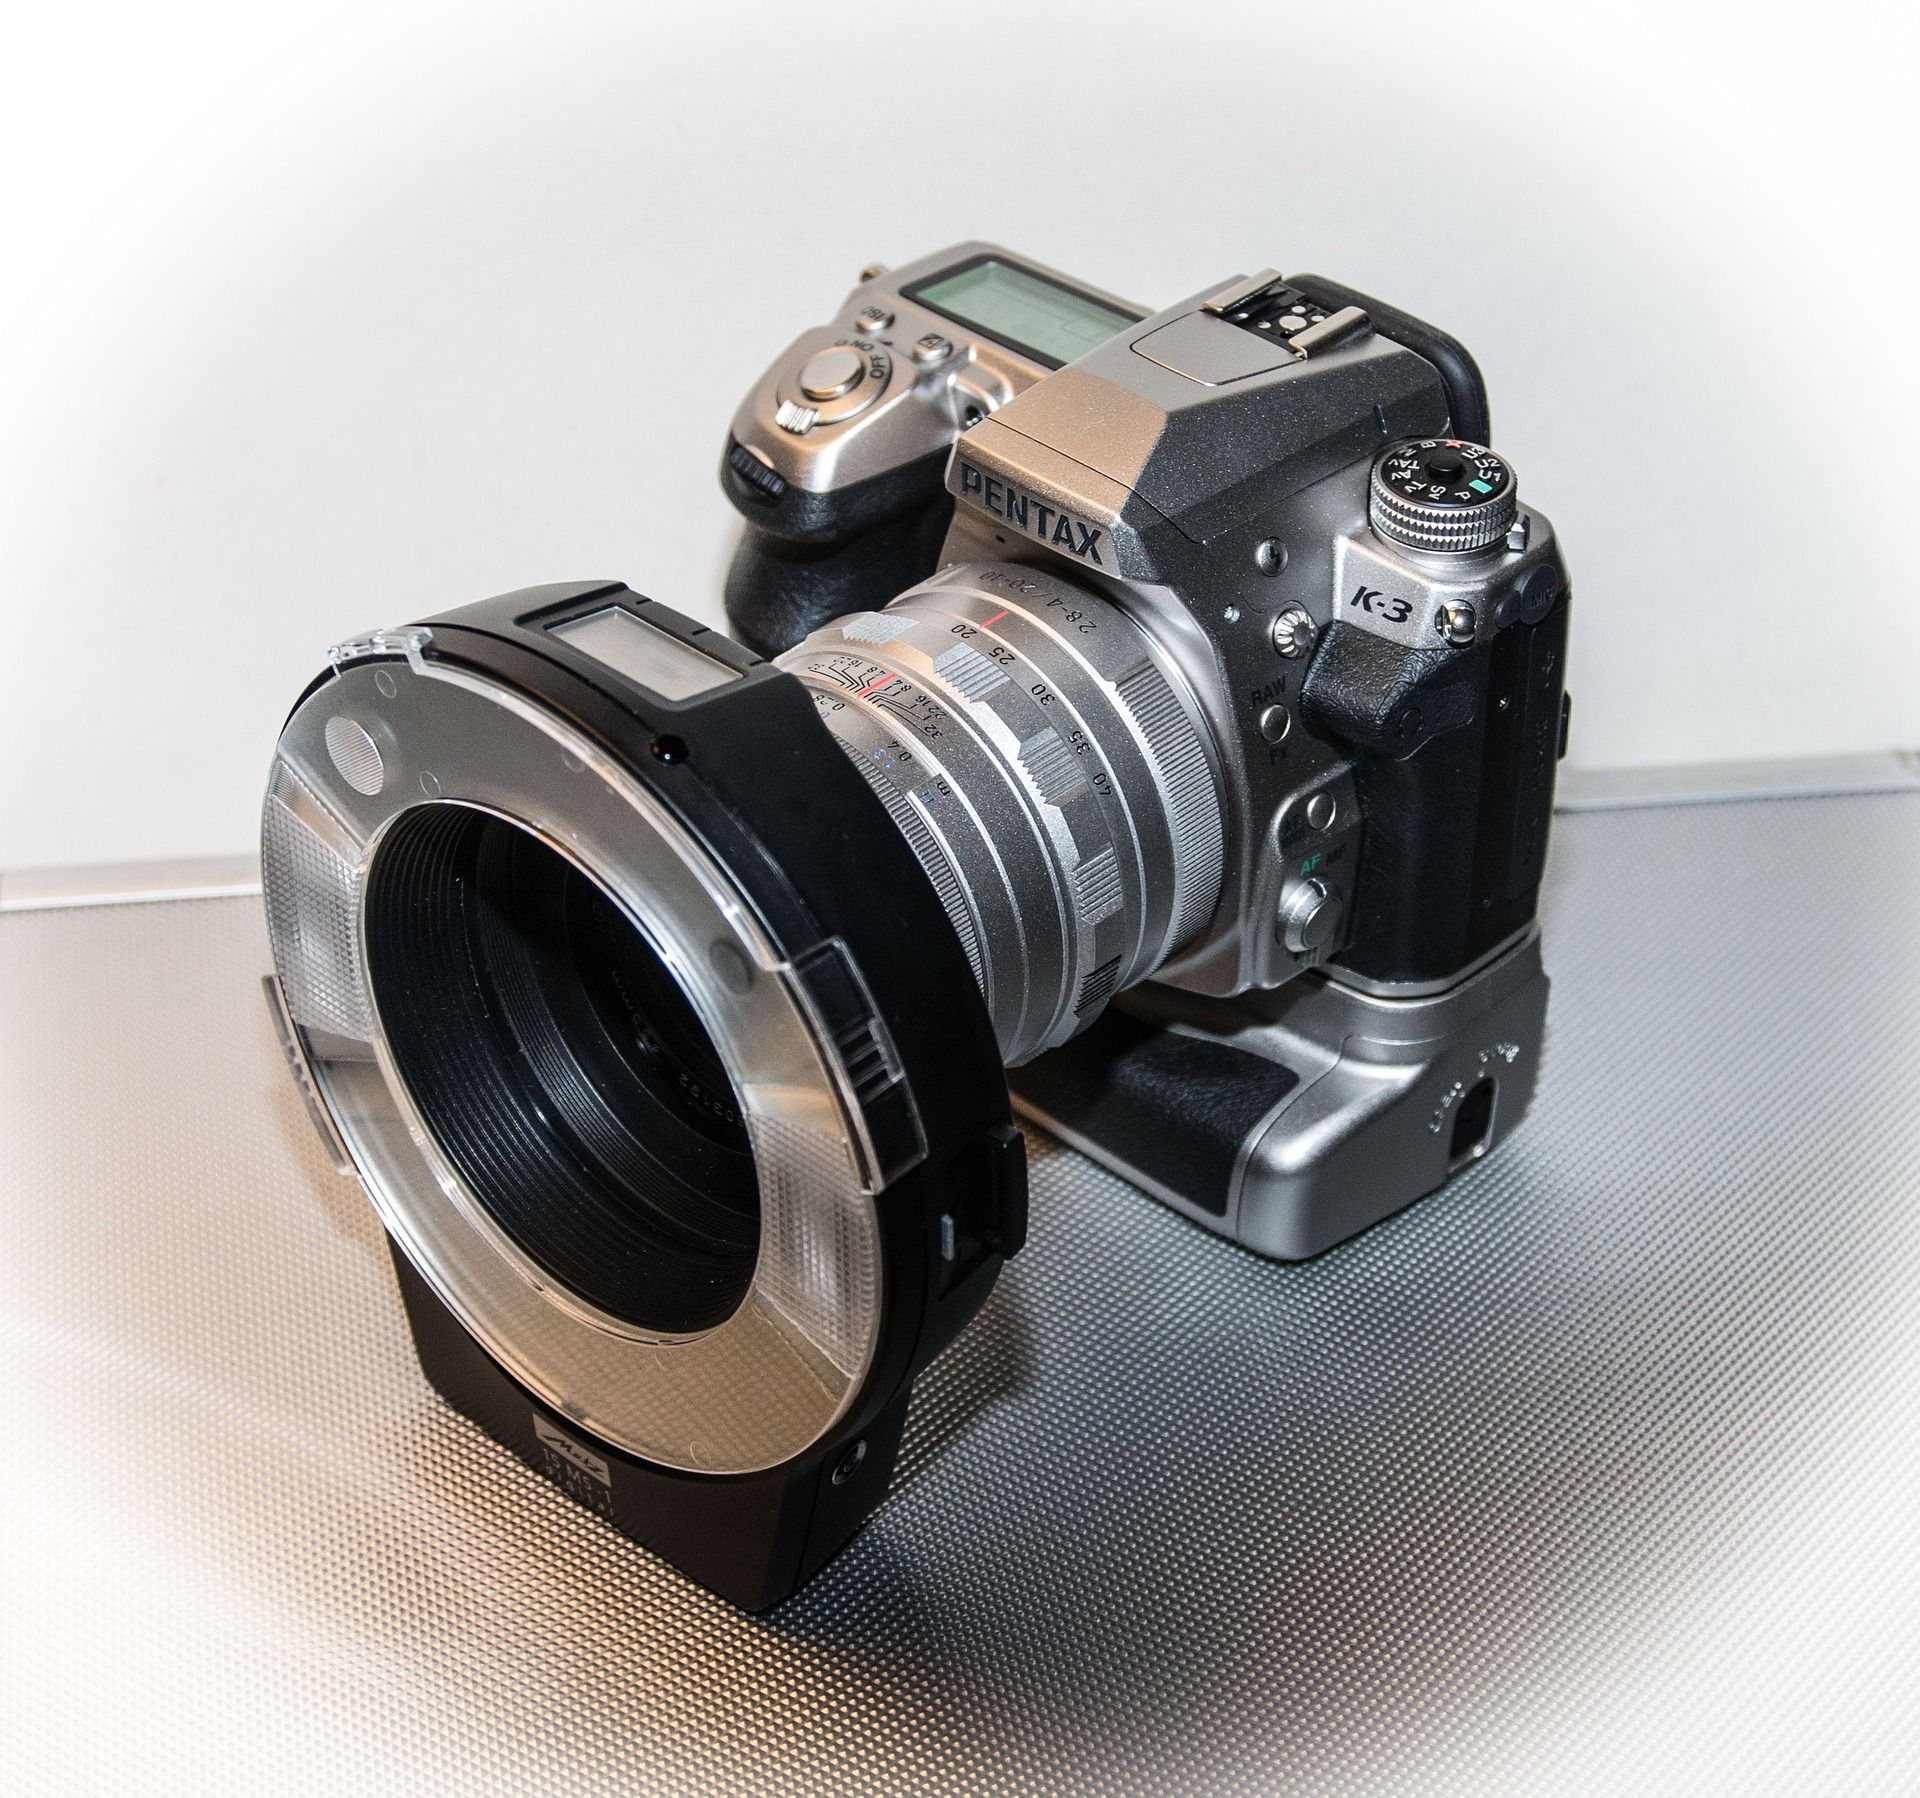 Ring Flash on a Pentax camera